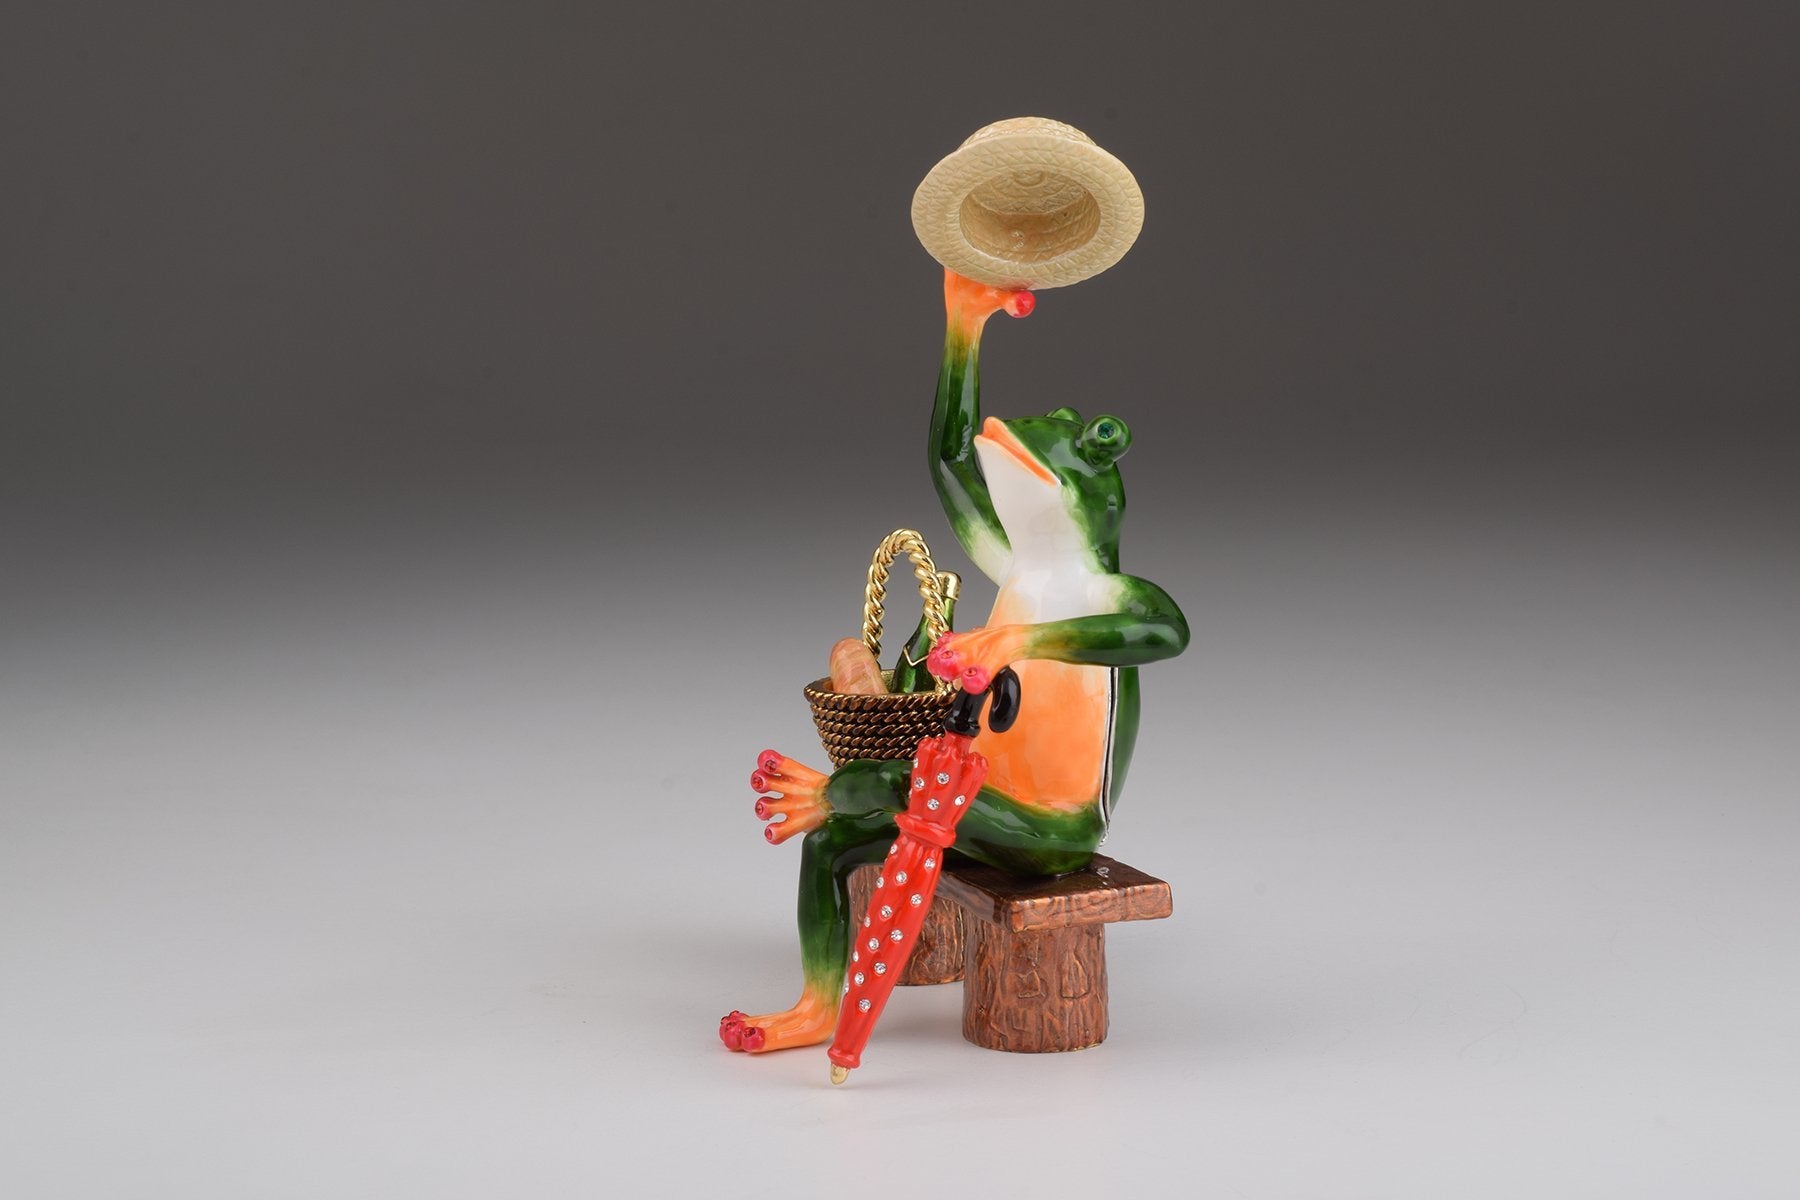 Keren Kopal Green Frog on a Bench trinket box 156.50